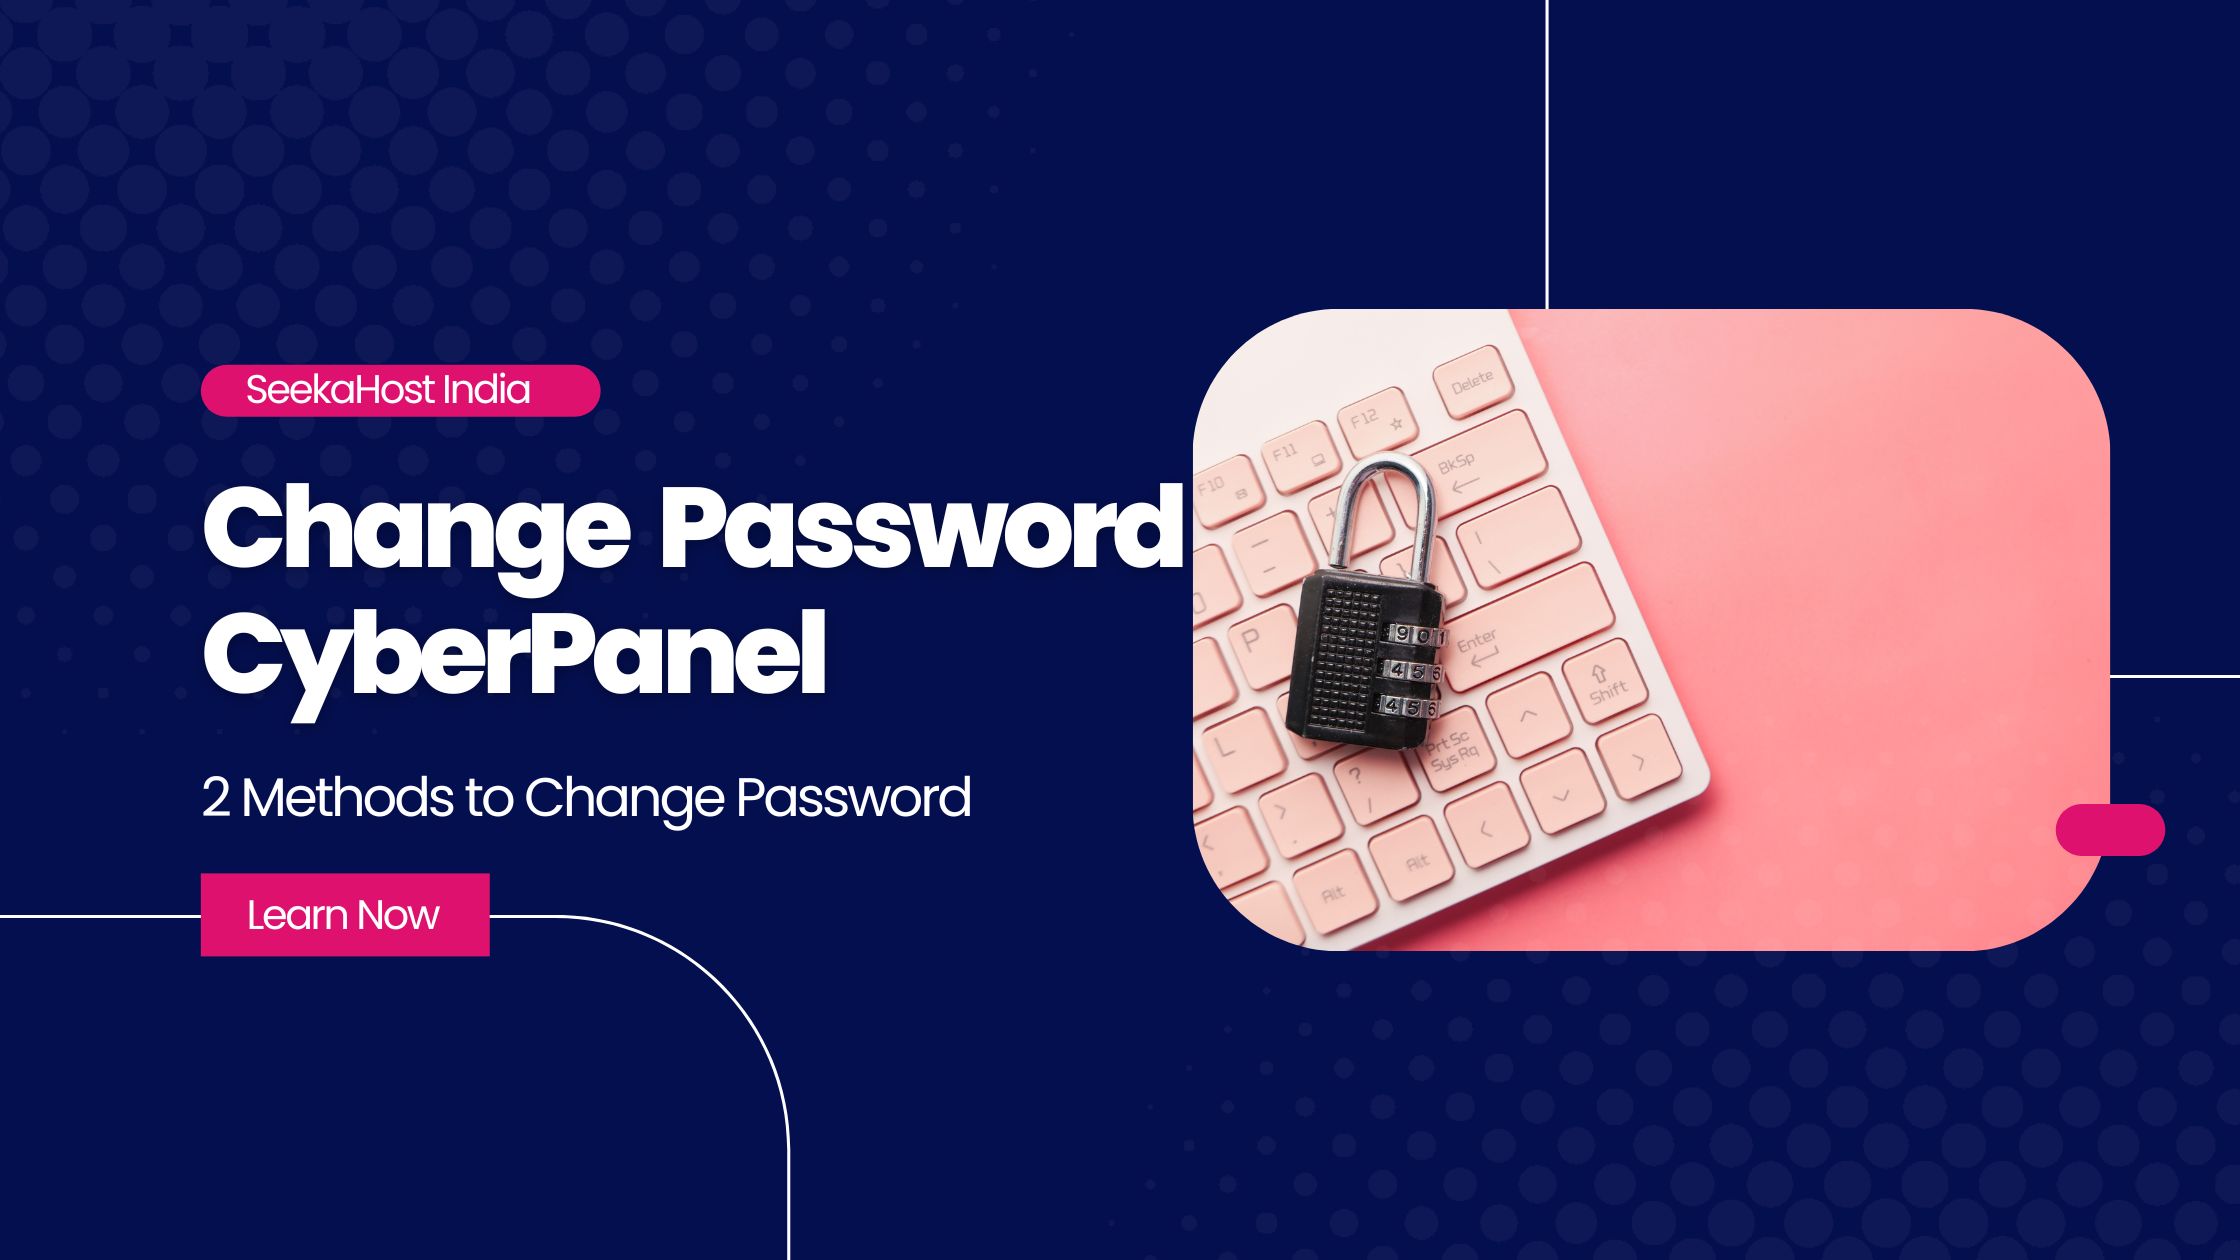 Change cyberpanel password